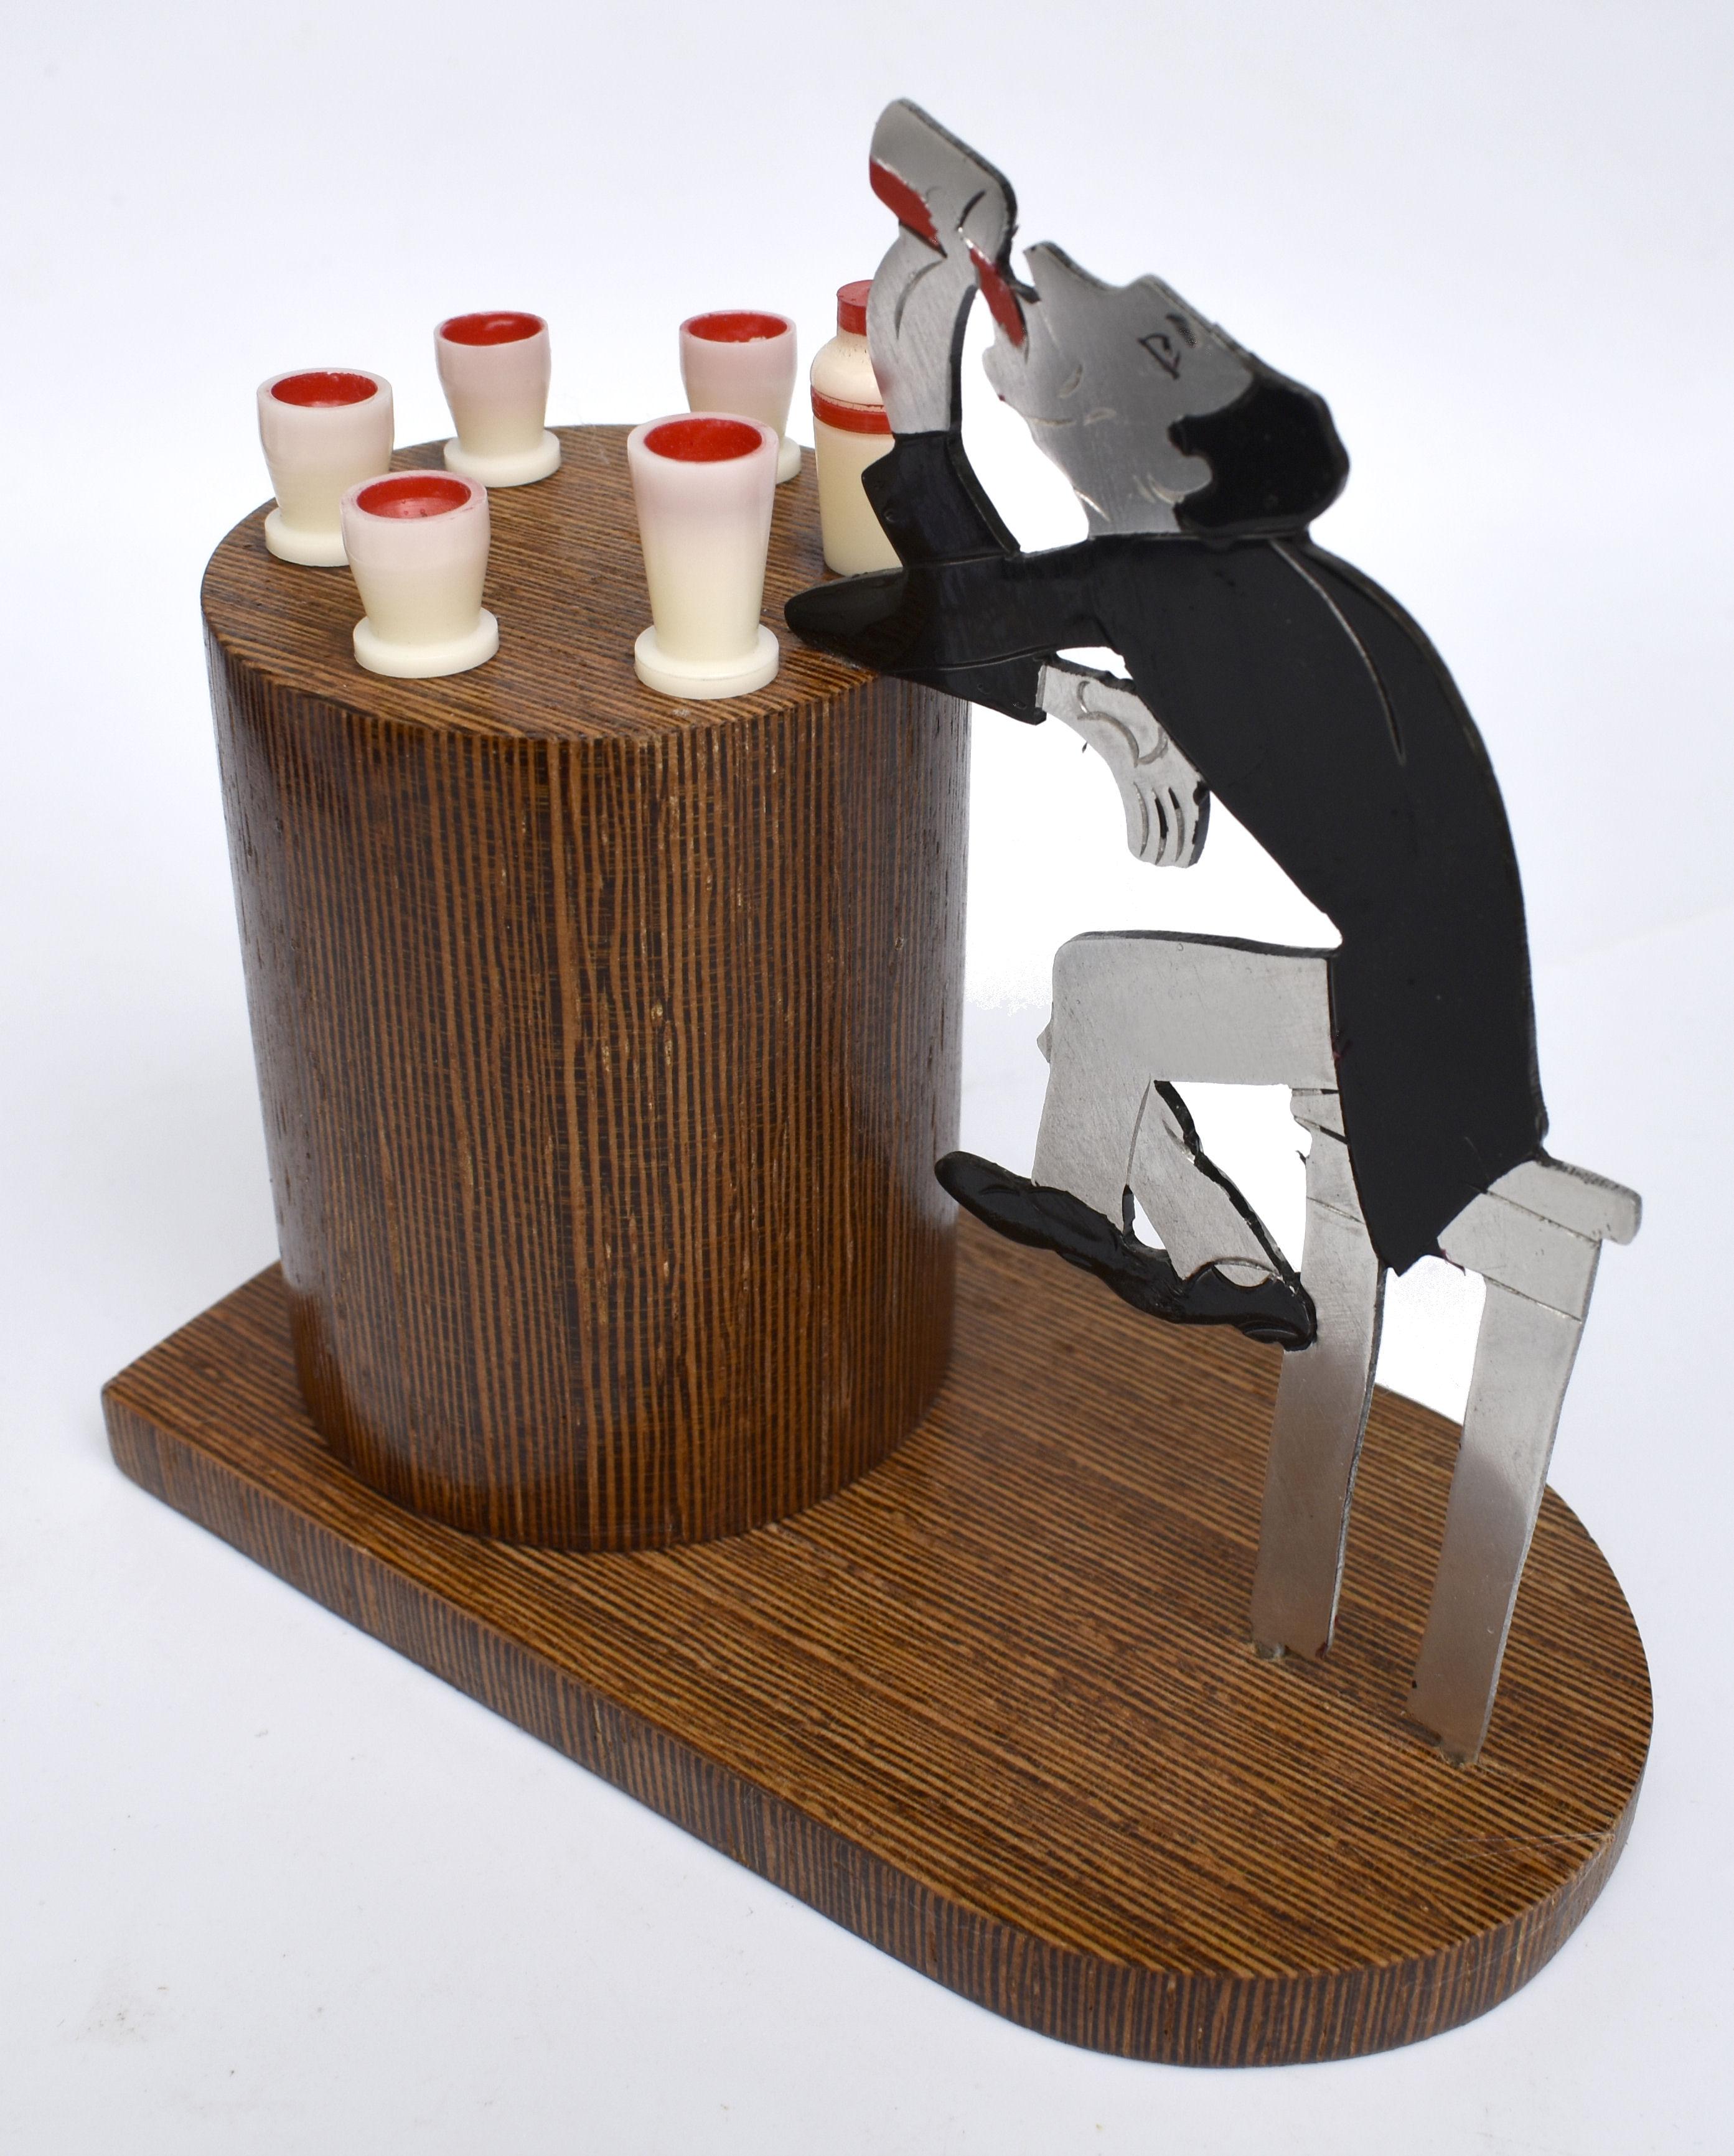 20th Century Art Deco Novelty Cocktail Sticks 'Drunken Bar' by Sudre, French, 1930's